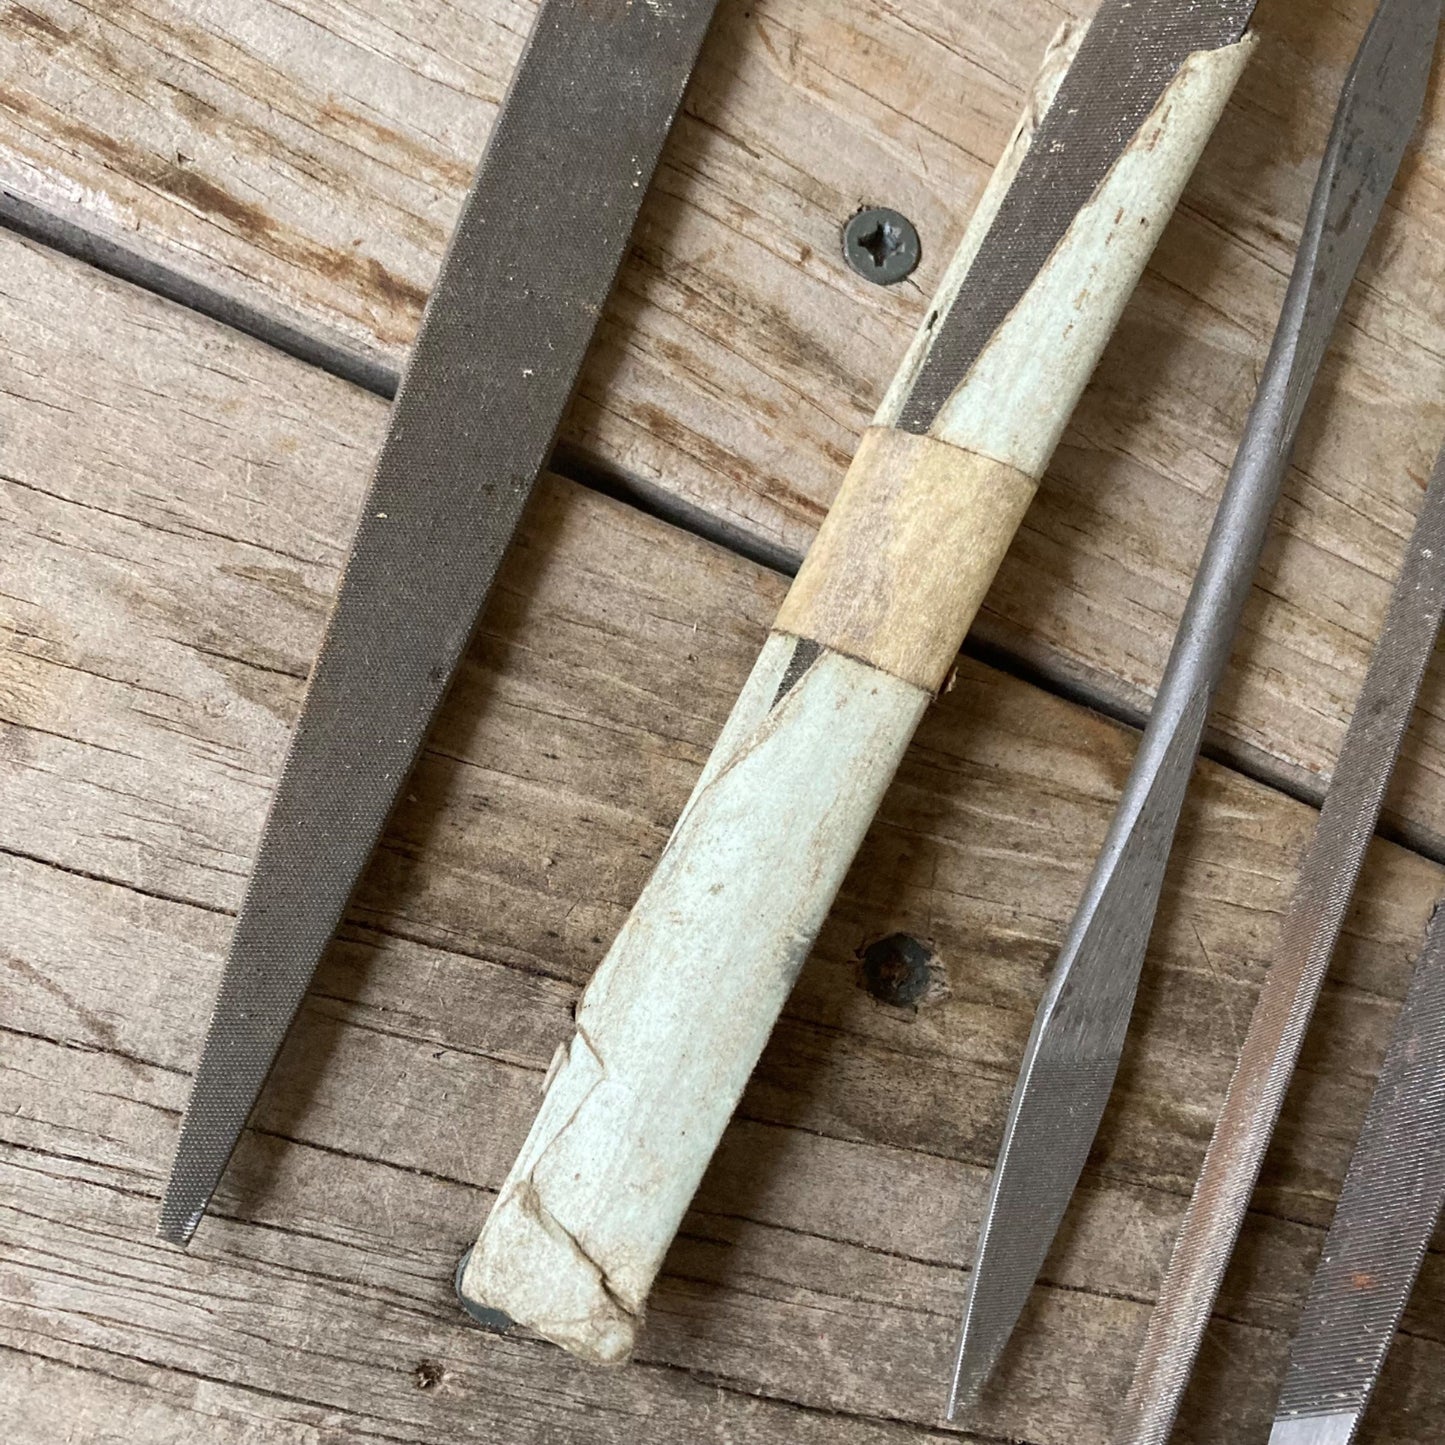 Lot 6 Vintage Hand Files Wood Metal Working Tools